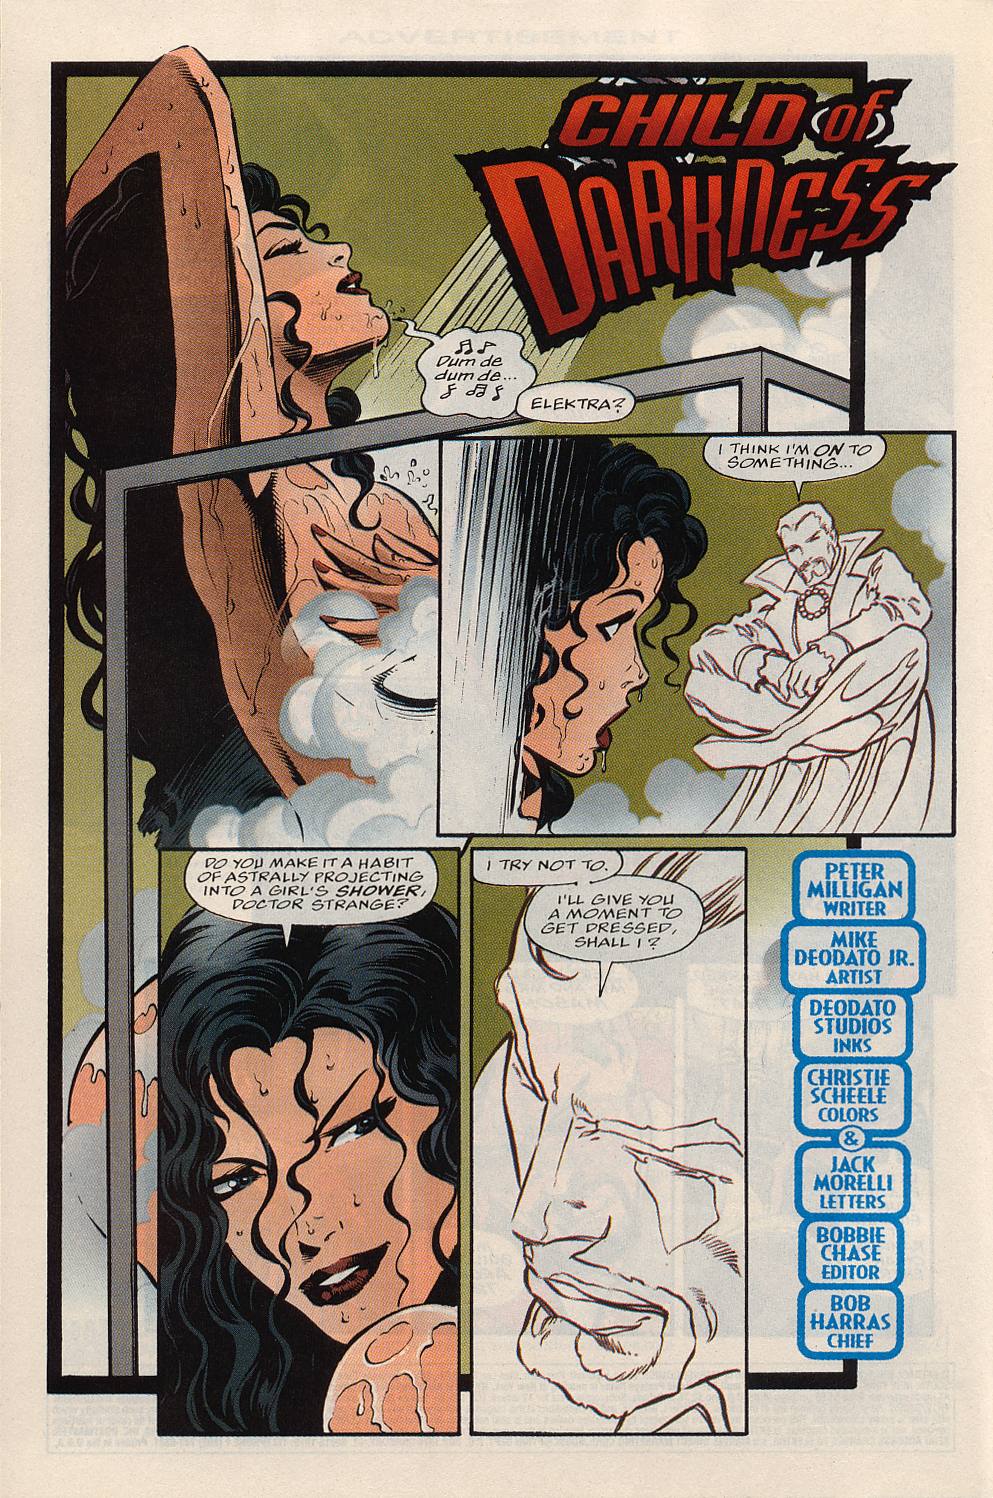 Elektra (1996) Issue #8 - Child of Darkness #9 - English 3